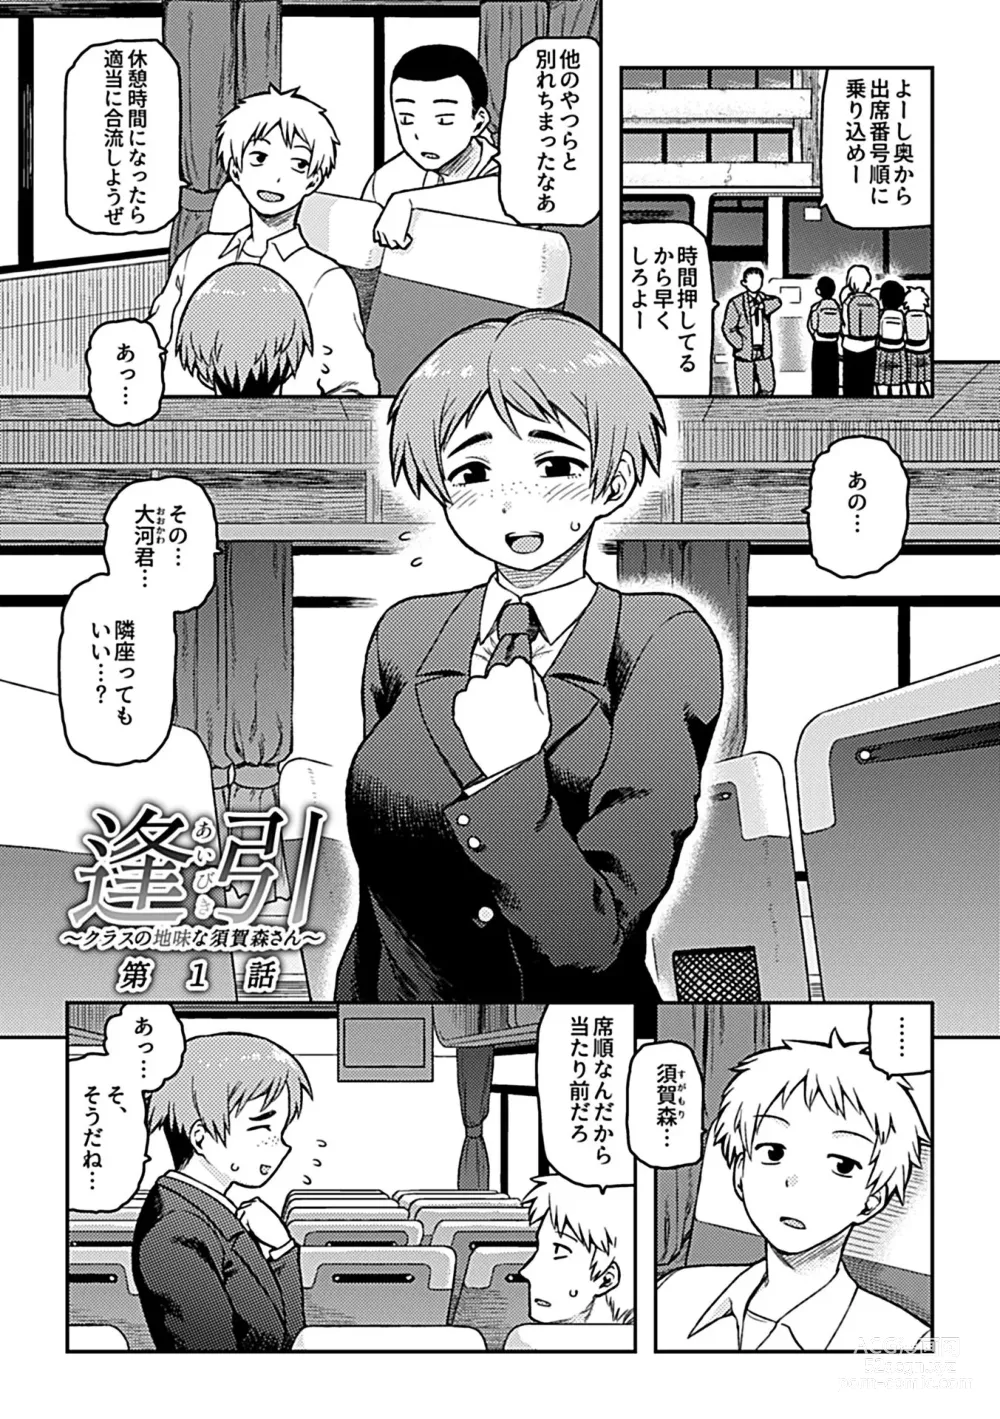 Page 5 of manga Aibiki